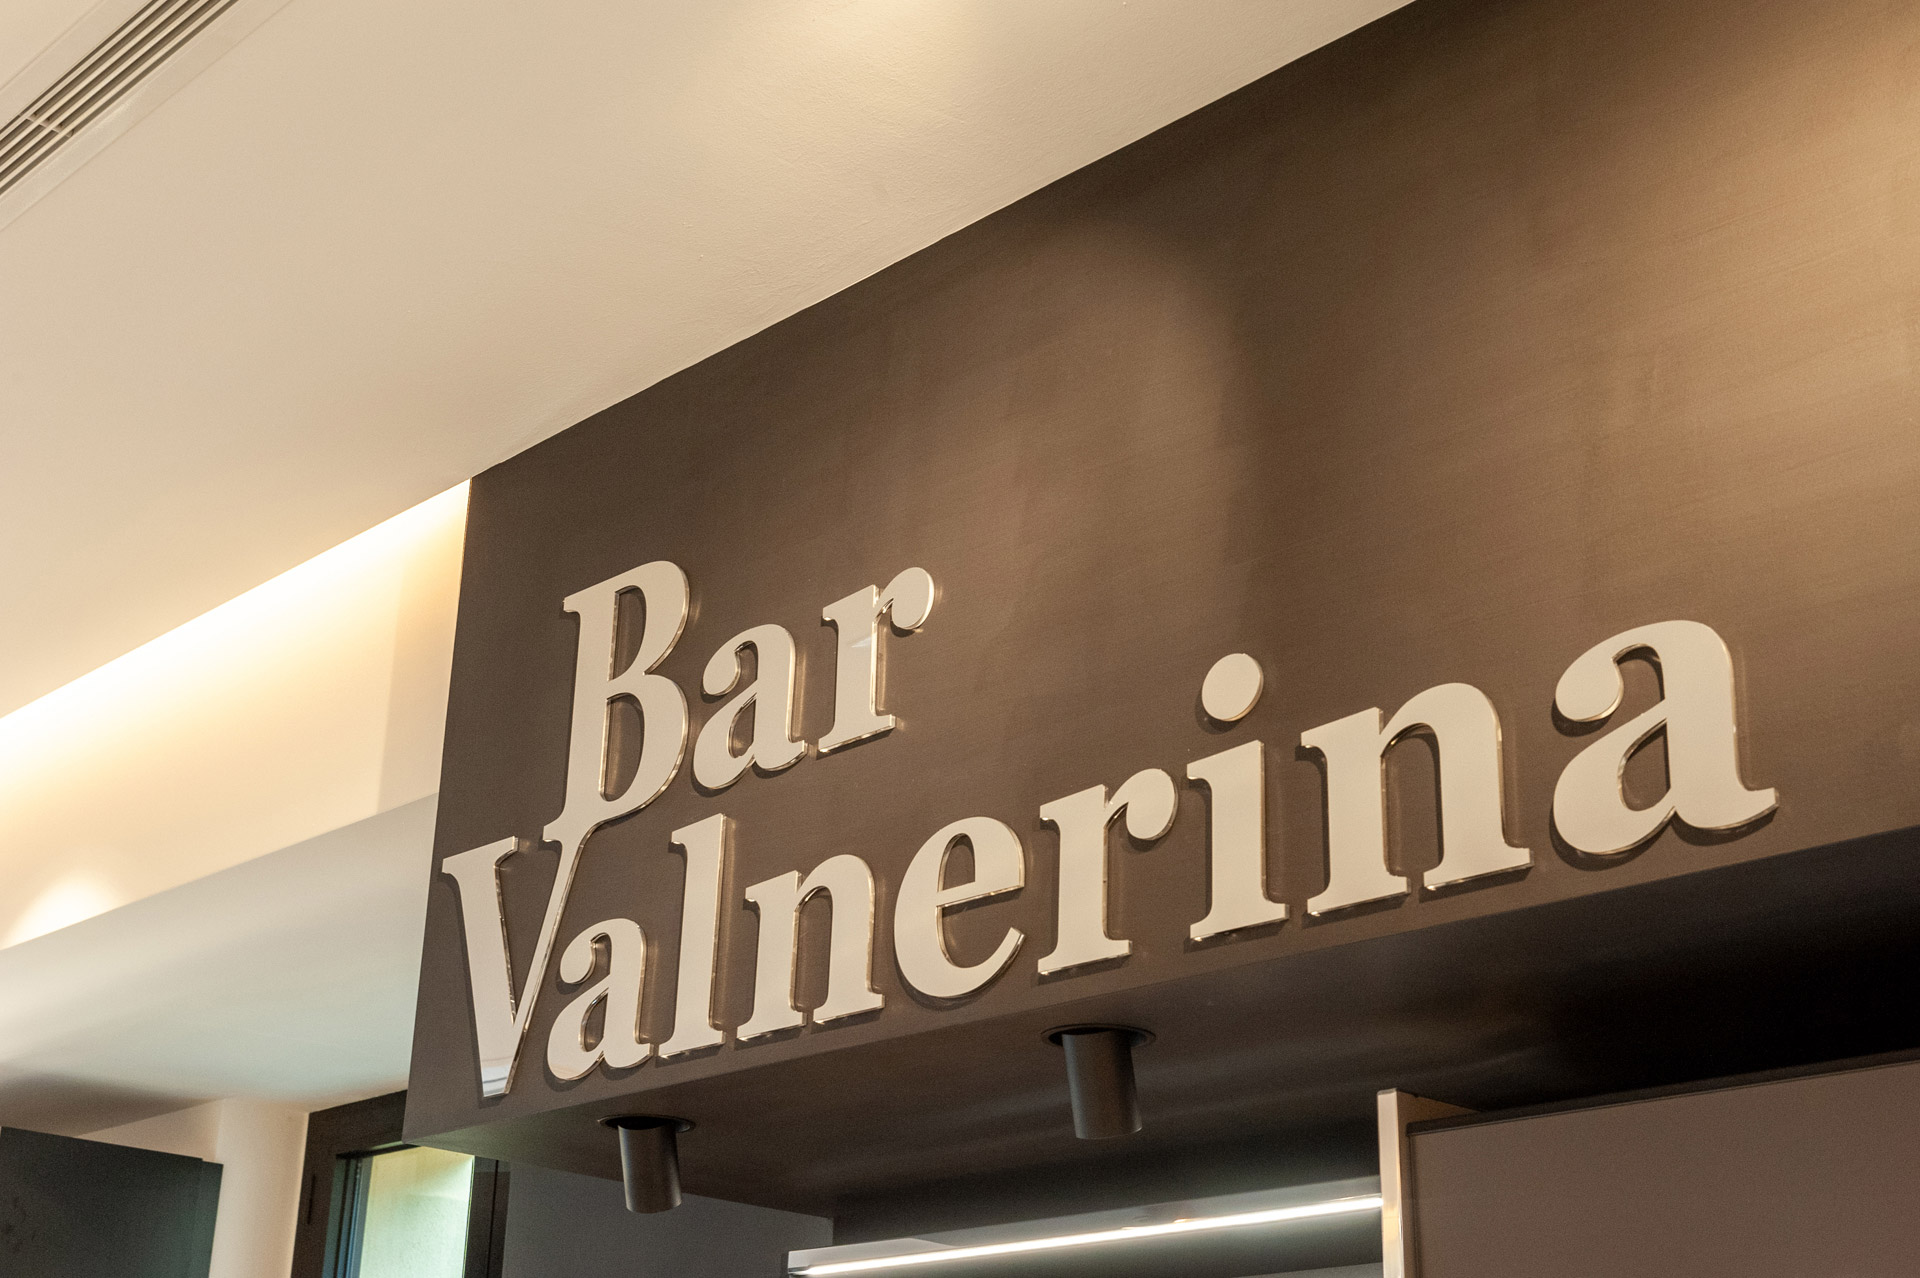 Bar valnerina, logo